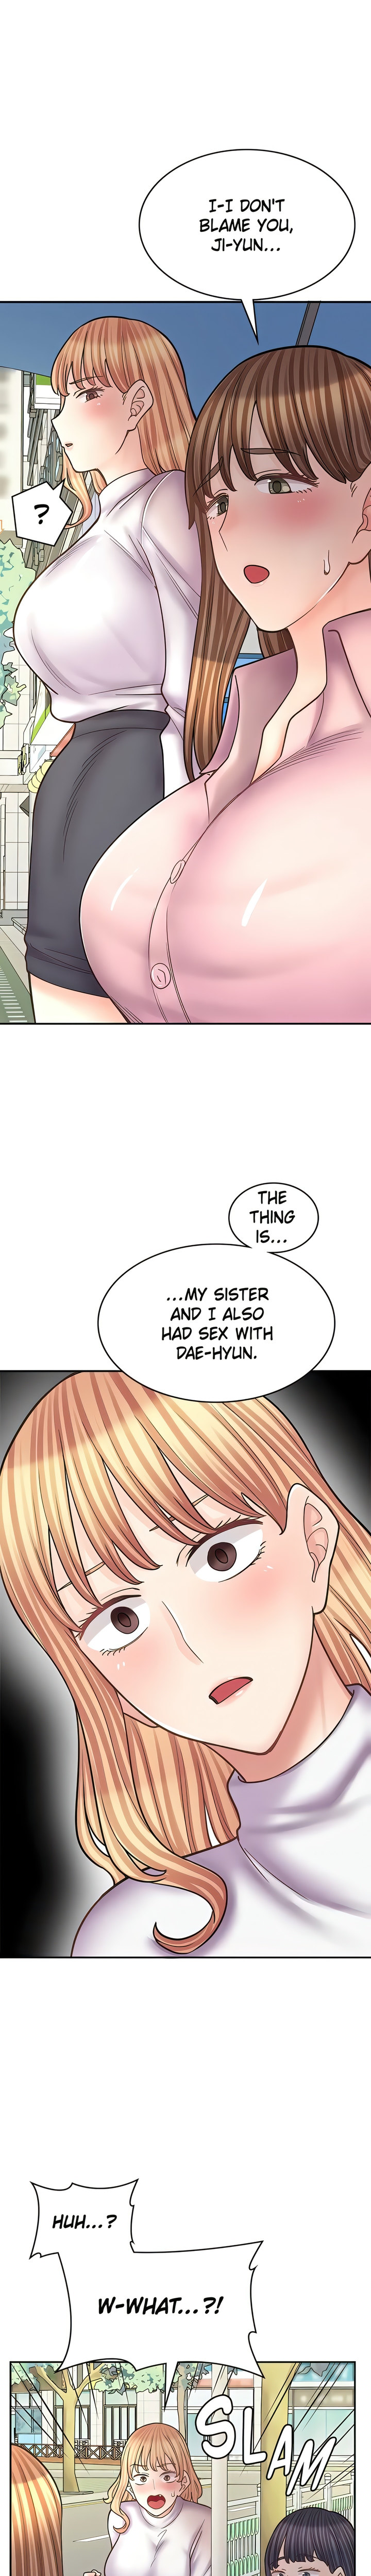 Erotic Manga Café Girls - Chapter 51 Page 5